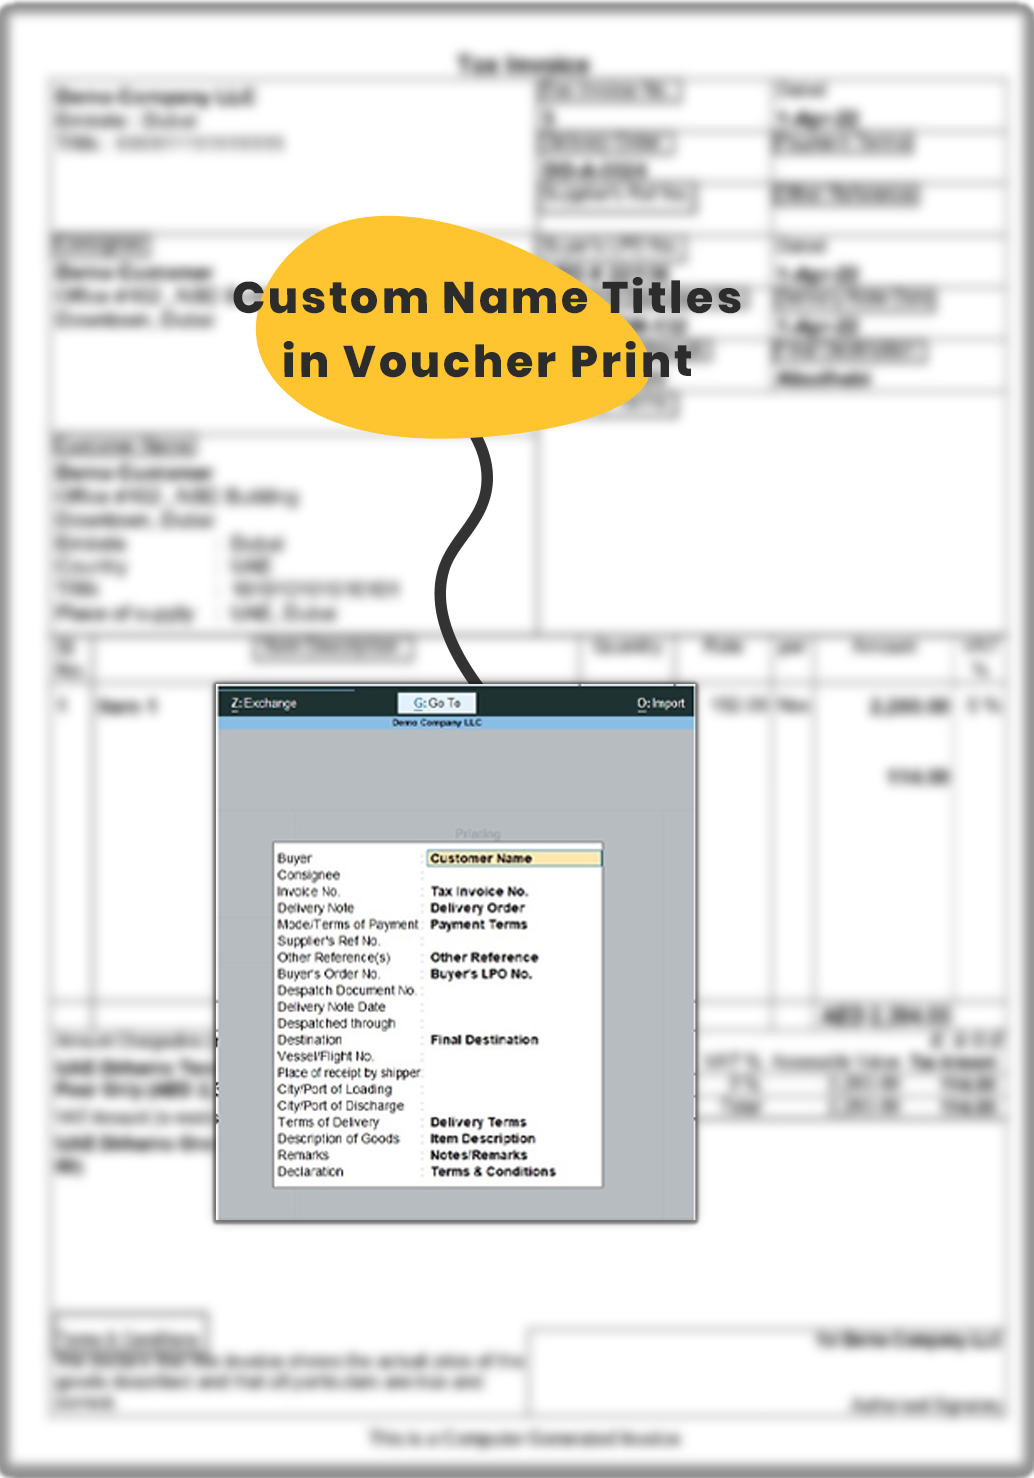 Custom Name Titles in Voucher Prints - Tally Customization